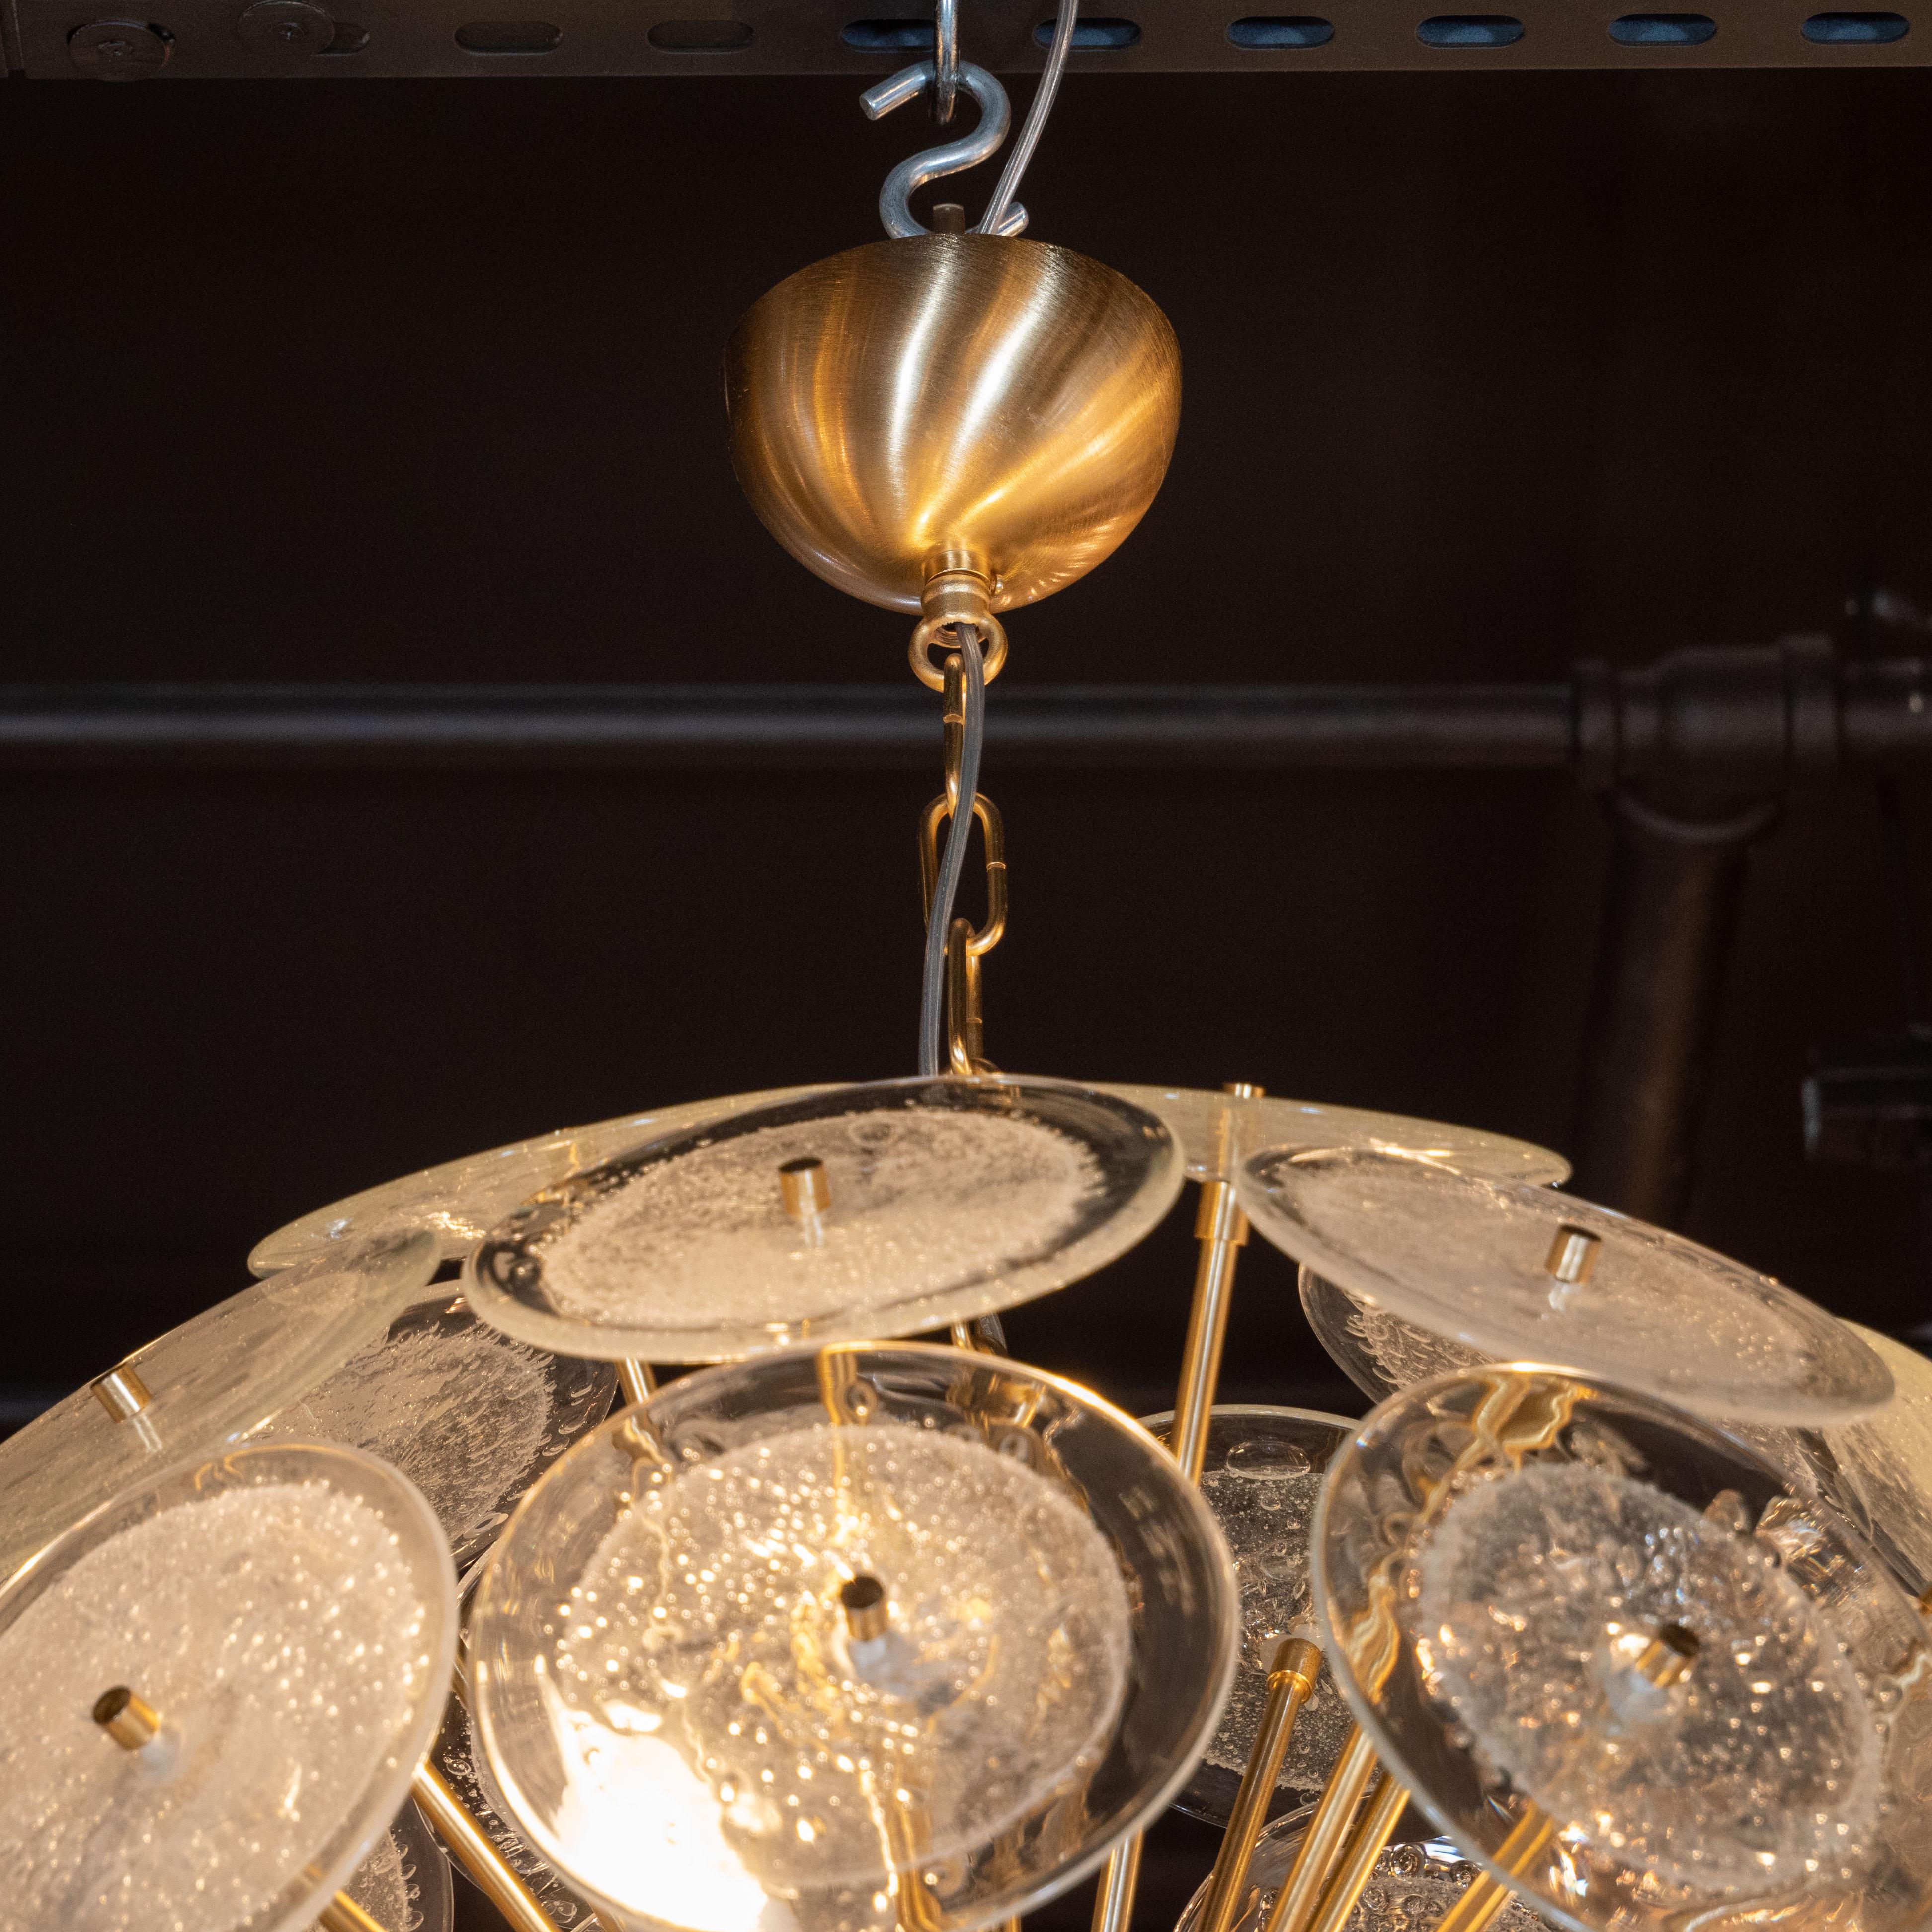 Contemporary ModernistB rass Sputnik Chandelier w/ Hand Blown Translucent Murano Glass Discs For Sale